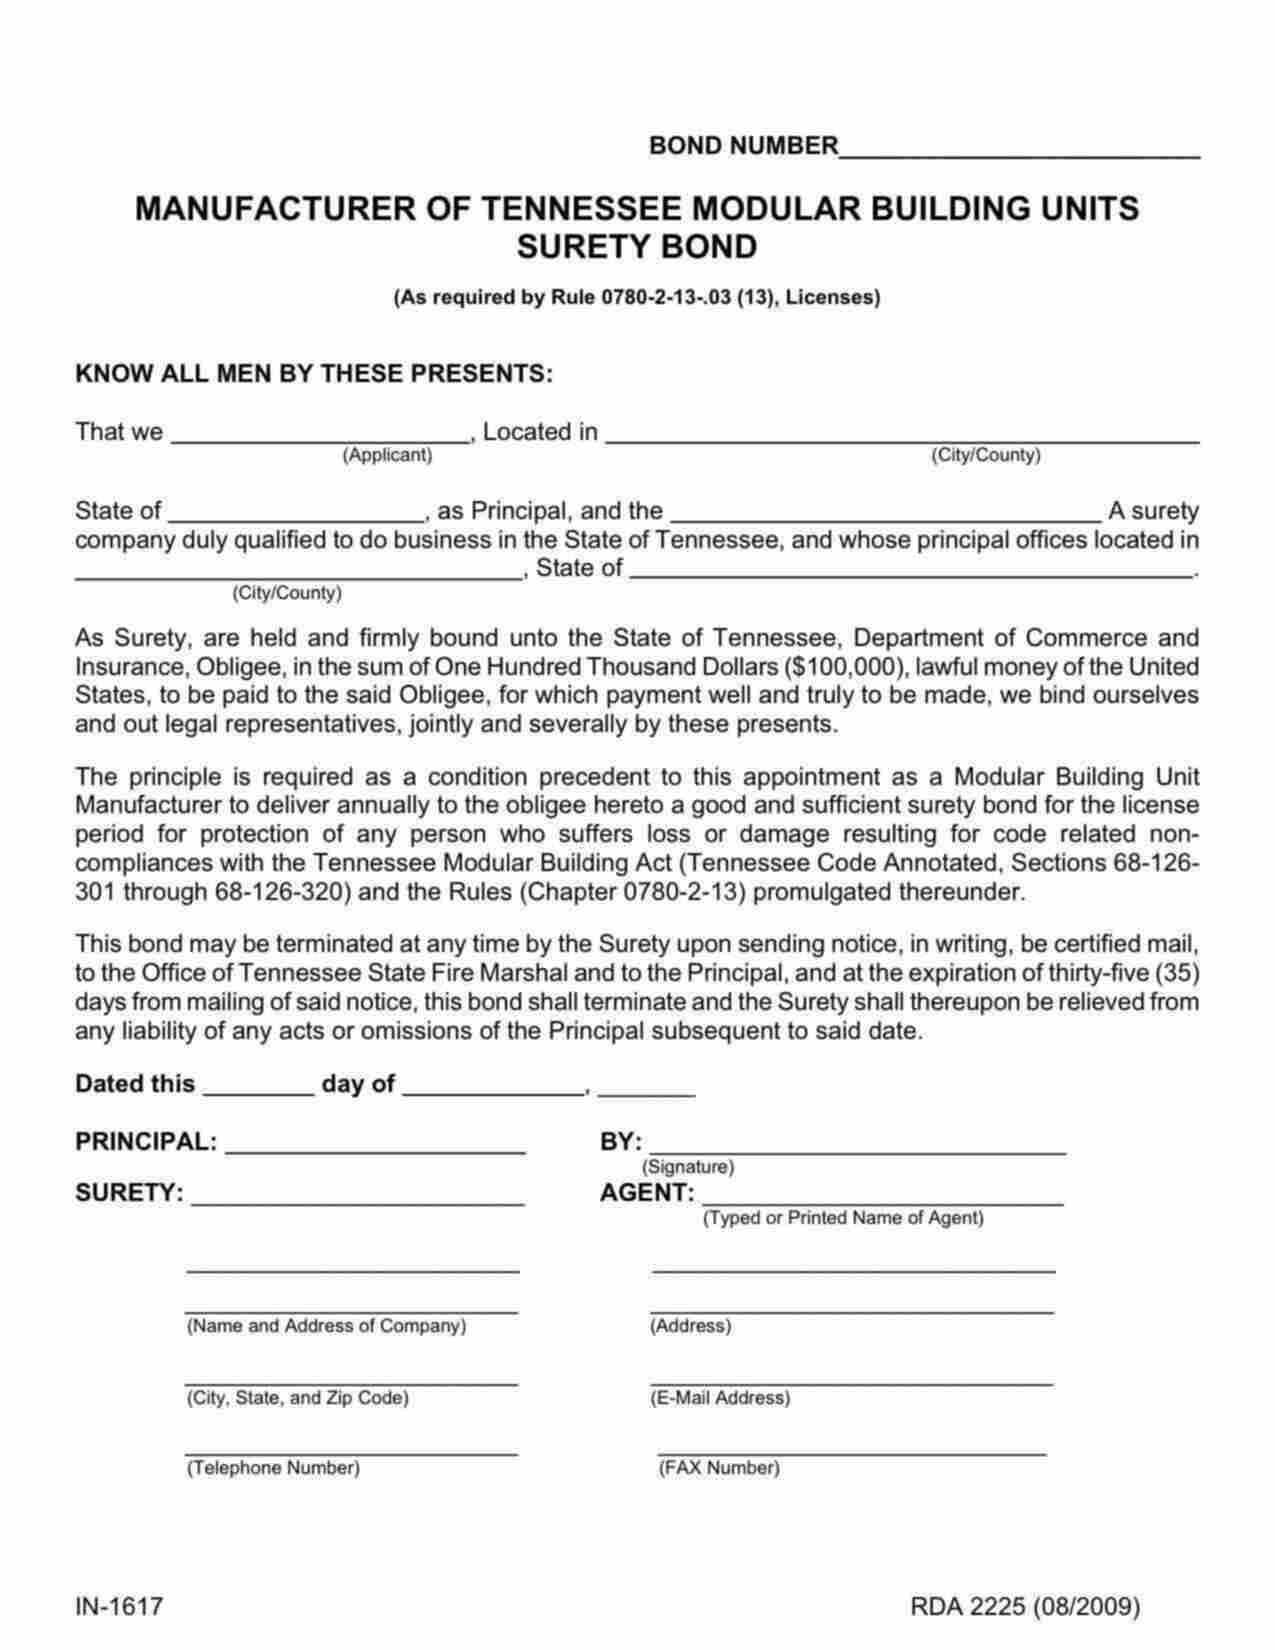 Tennessee Manufacturer of Modular Building Units Bond Form